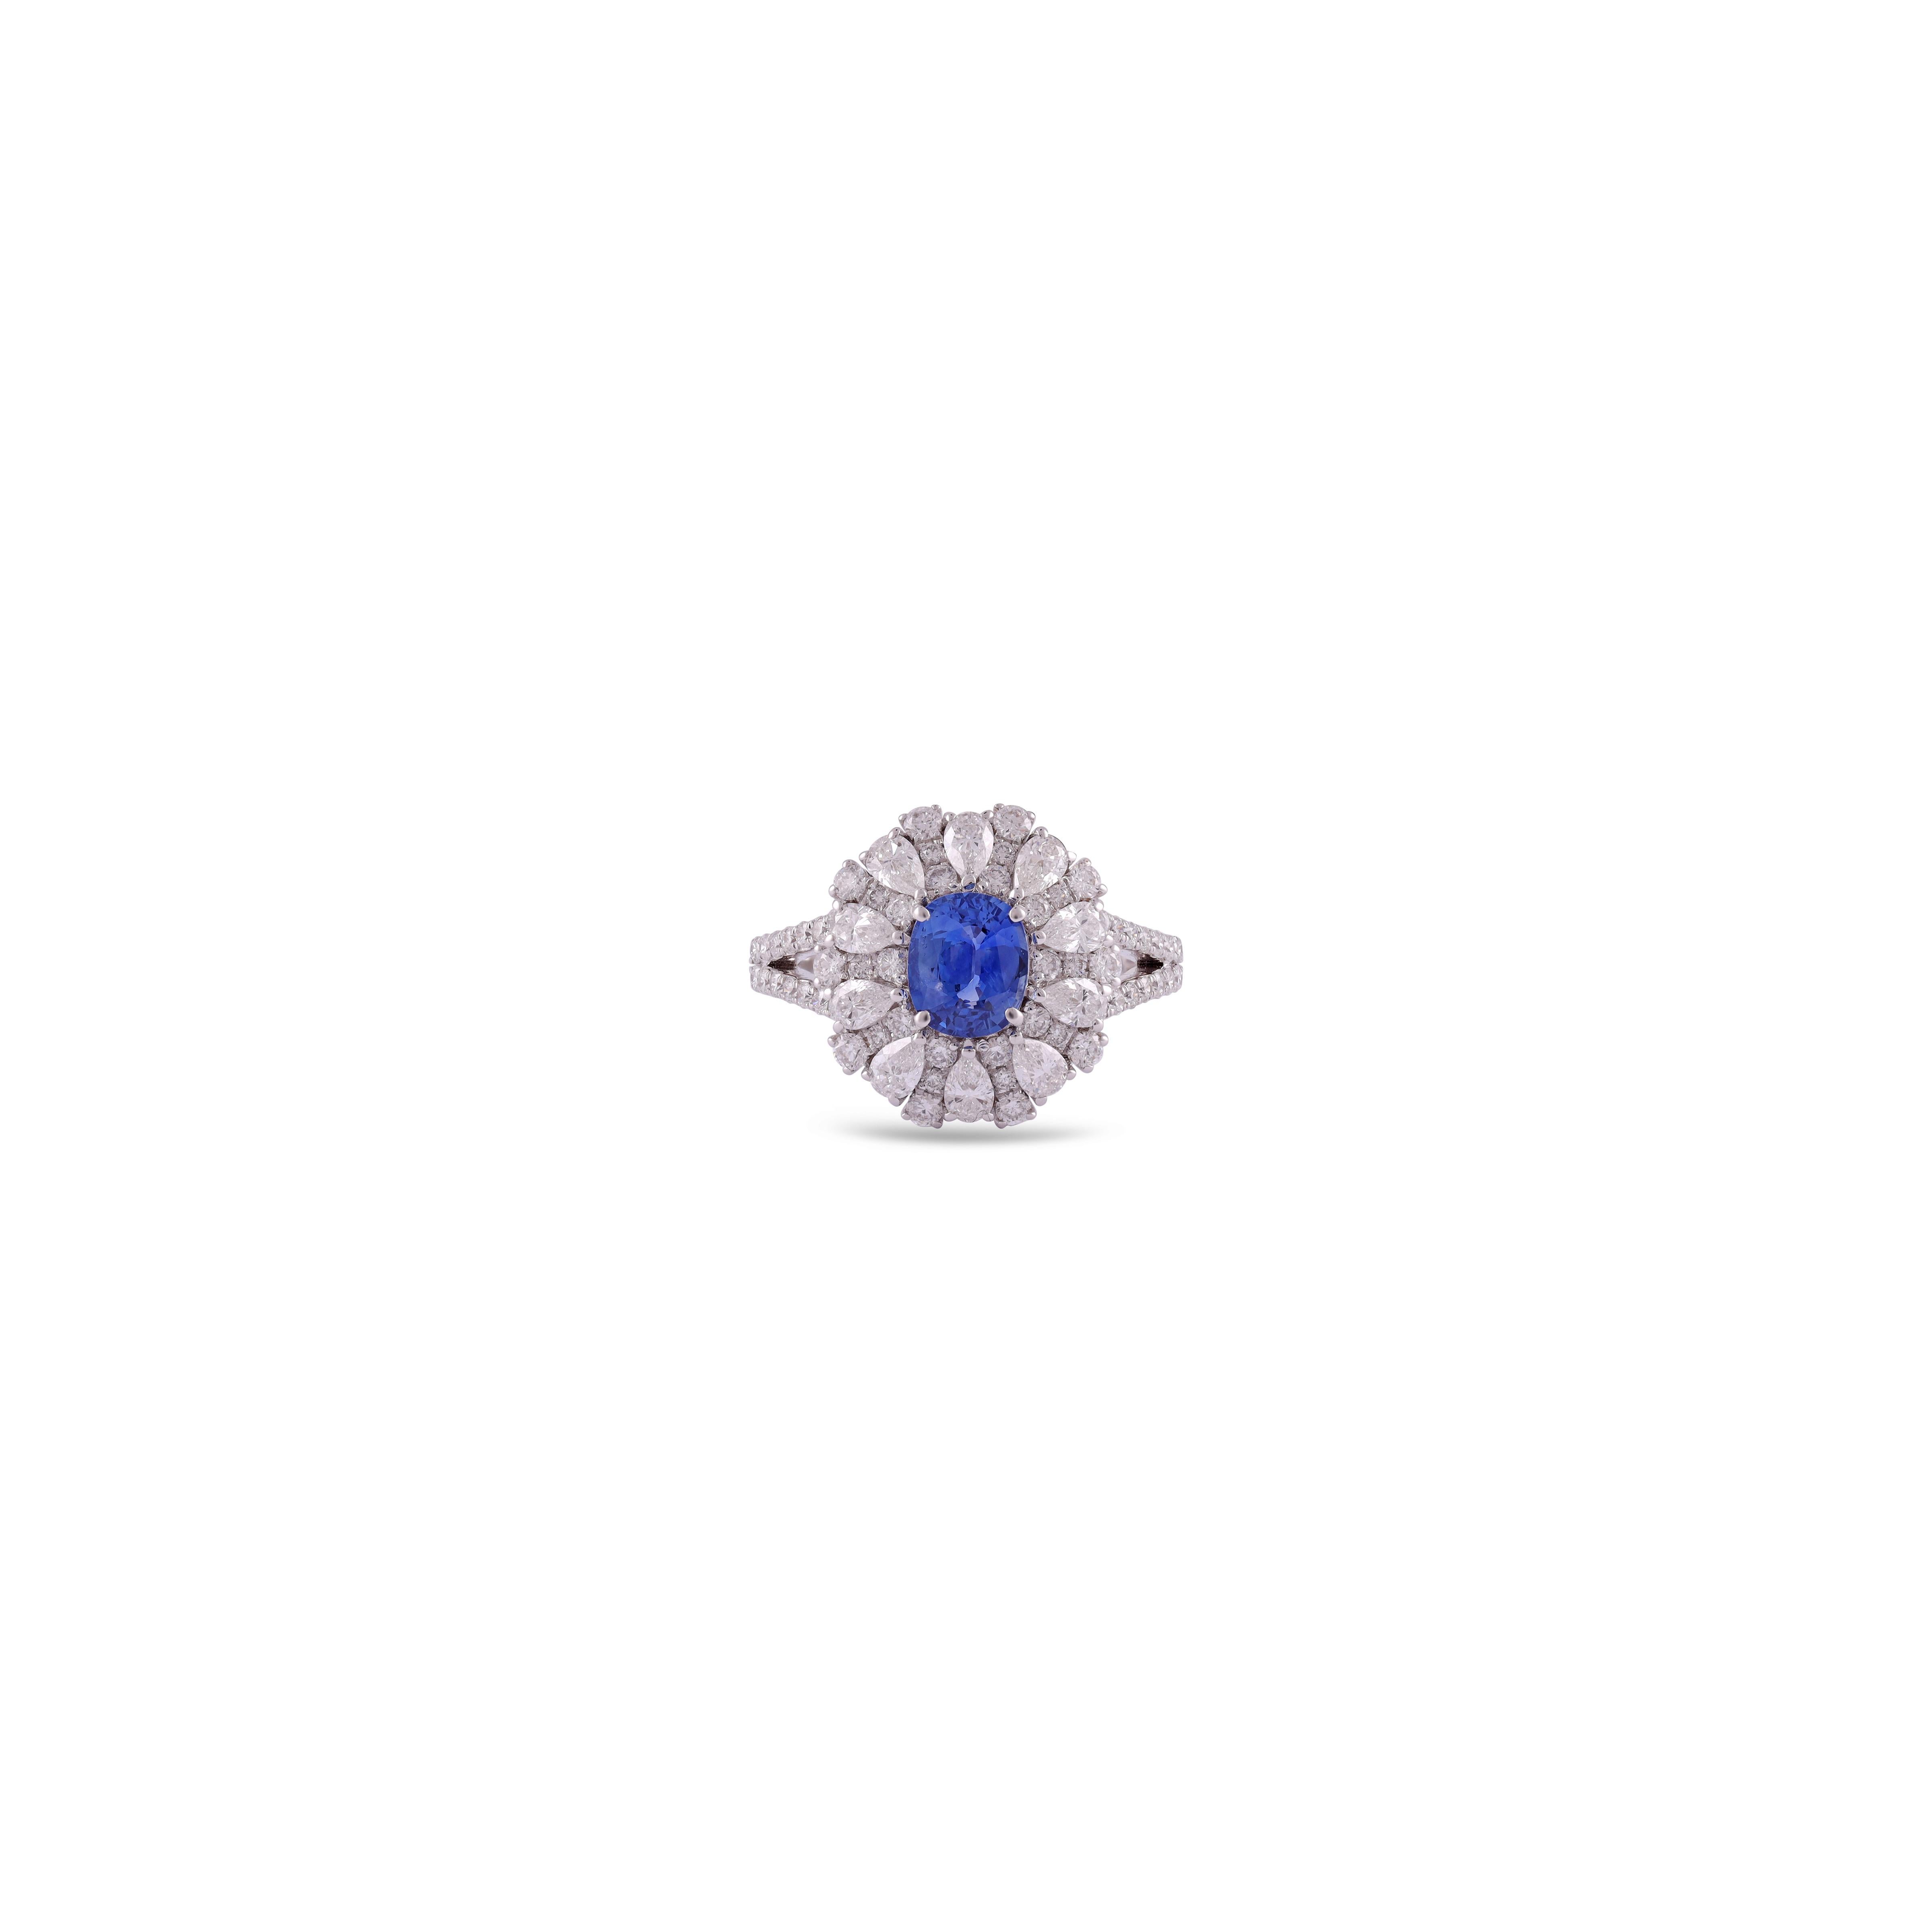 Blue Sapphire - 1.13 Carat
Diamond - 1.57 Carats

18KT White Gold